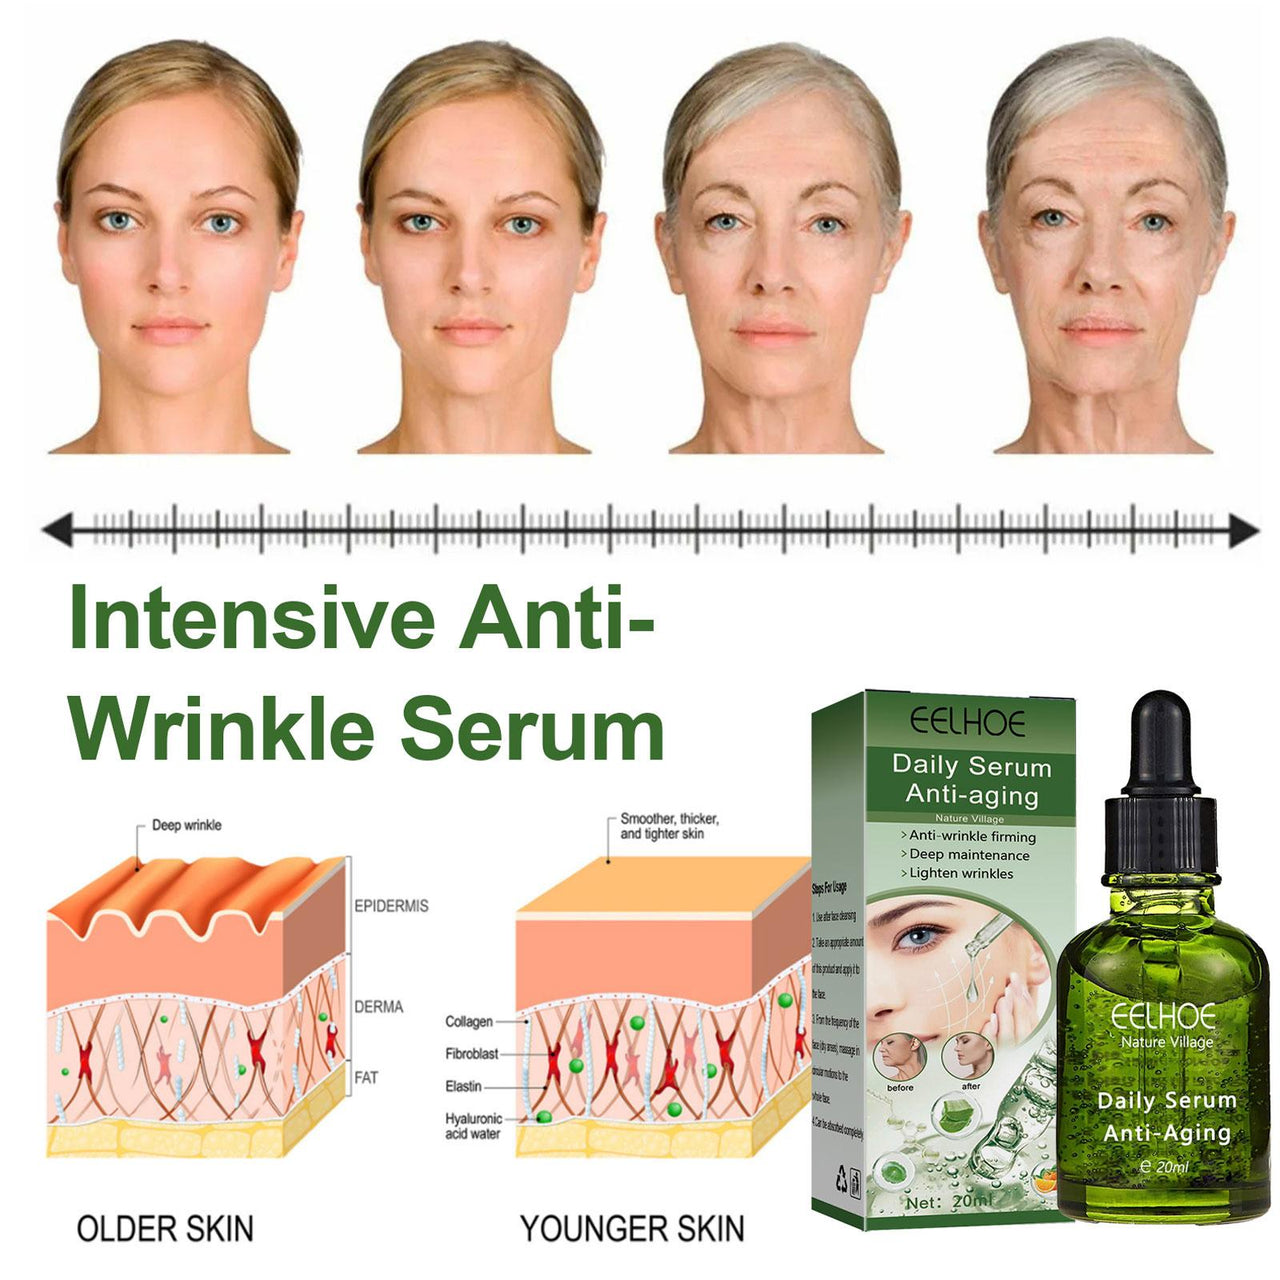 EELHOE™ Deep Anti-Wrinkle and Anti-Aging Serum - thedealzninja